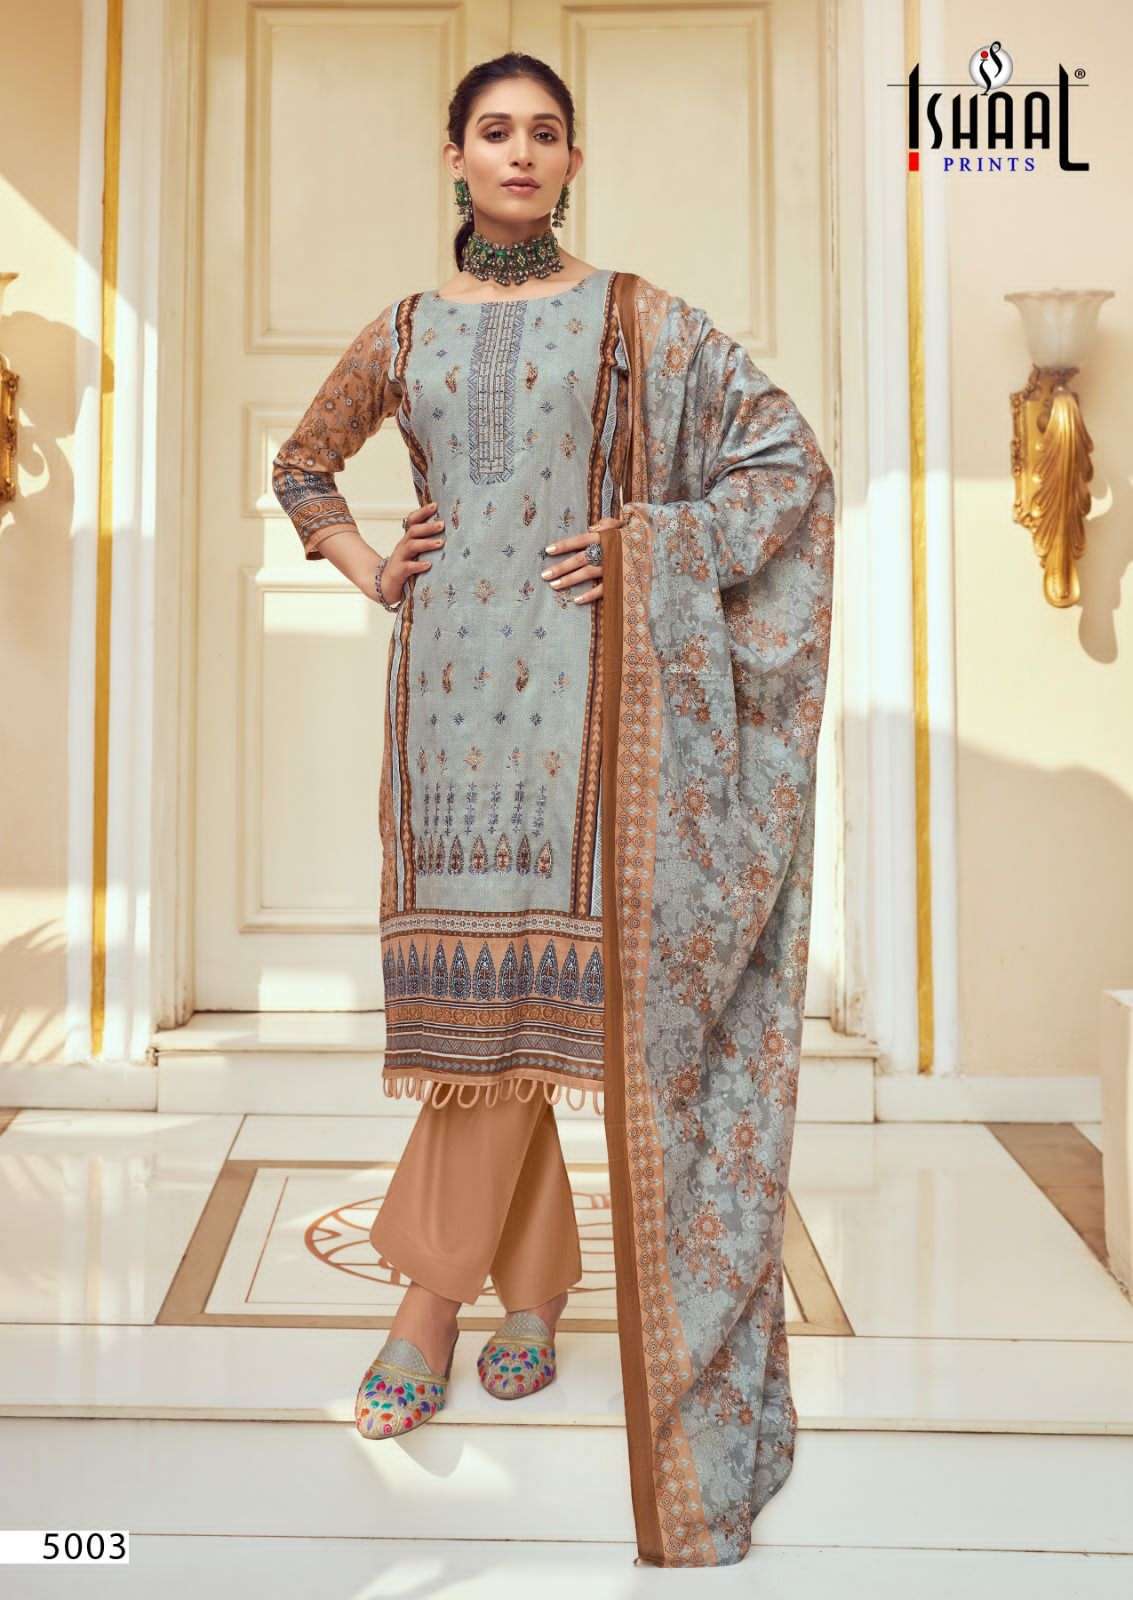 ishaal prints embroidered vol-5 5001-5010 series designer fancy salwar kameez wholesaler surat gujarat